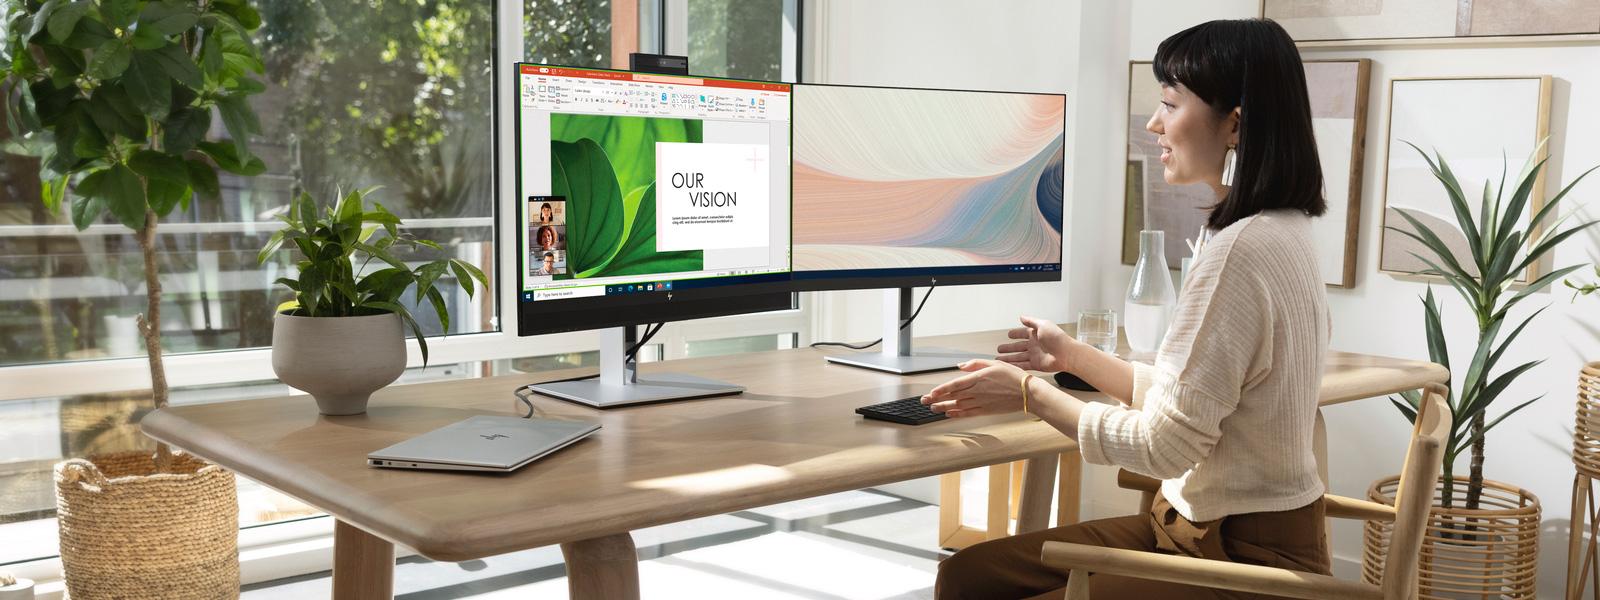 Woman working on a multiple monitor desktop setup